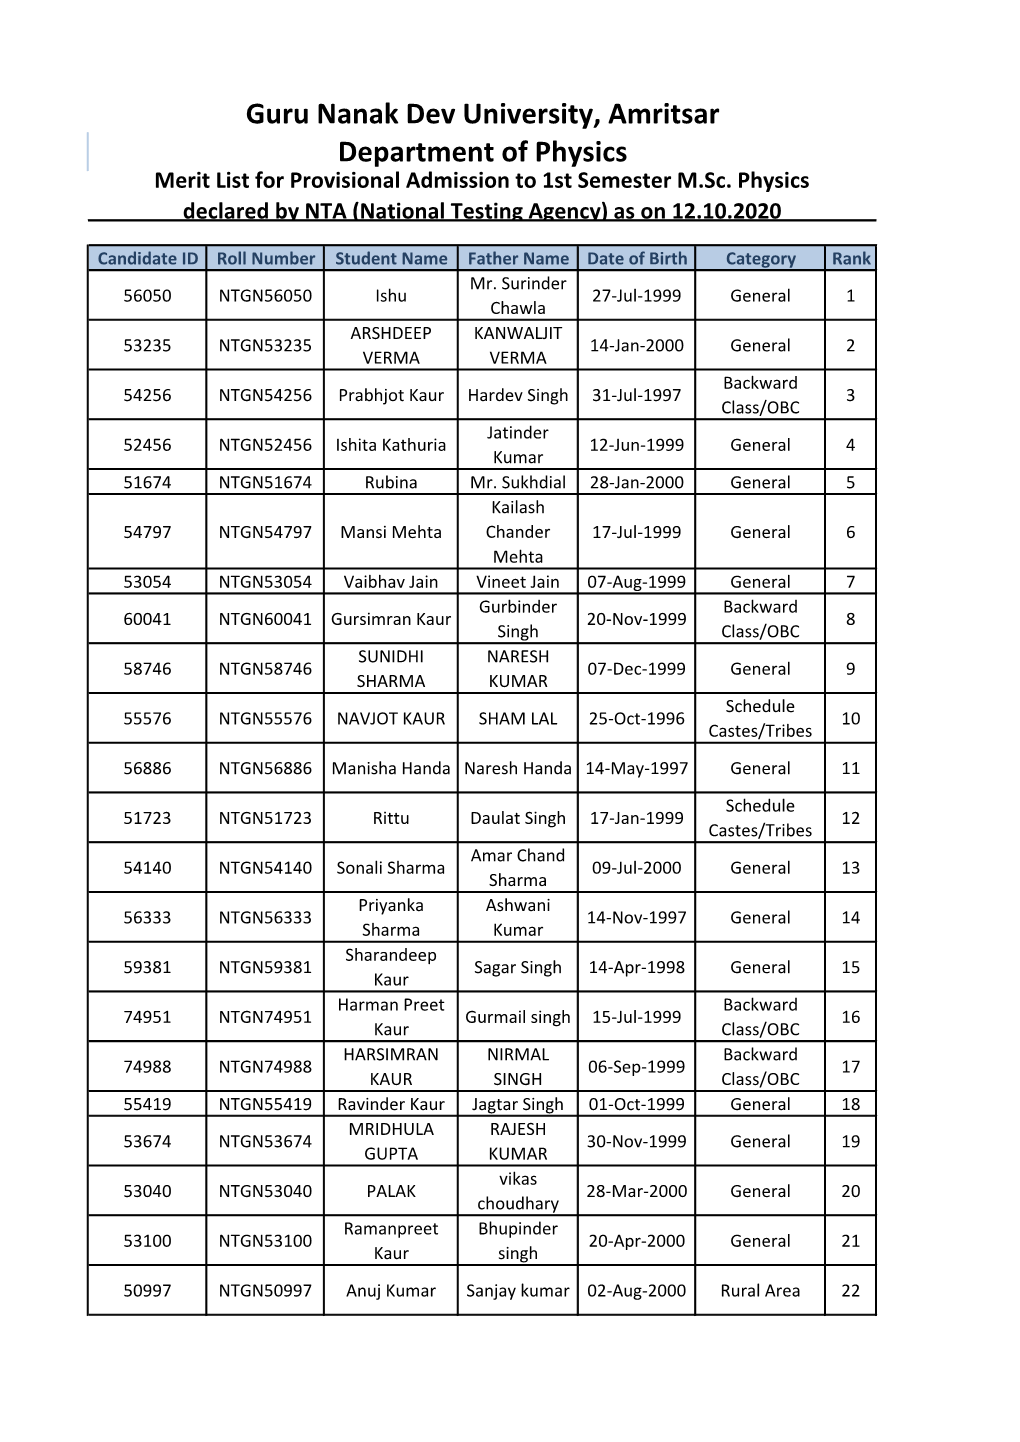 Guru Nanak Dev University, Amritsar Department of Physics Merit List for Provisional Admission to 1St Semester M.Sc